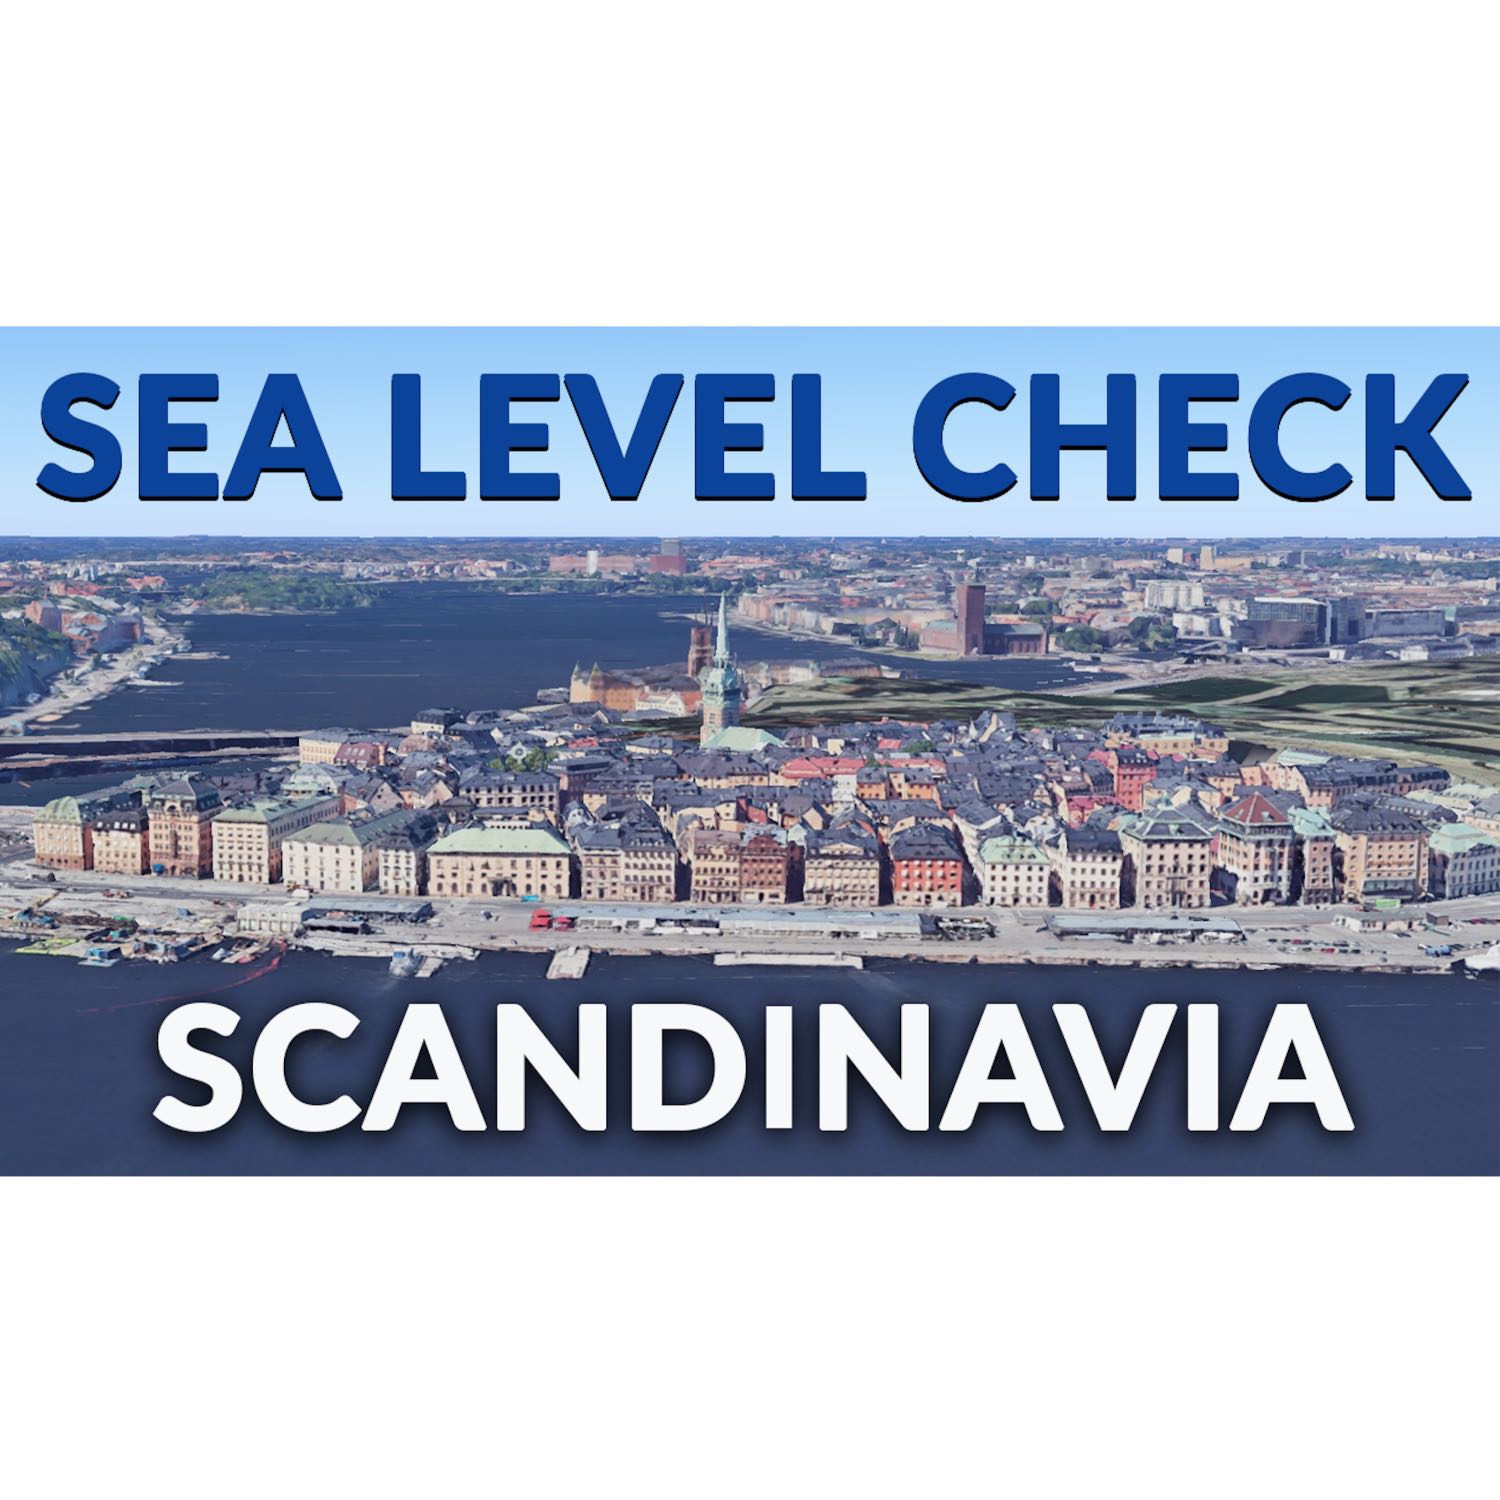 Sea Level Check - Scandinavia